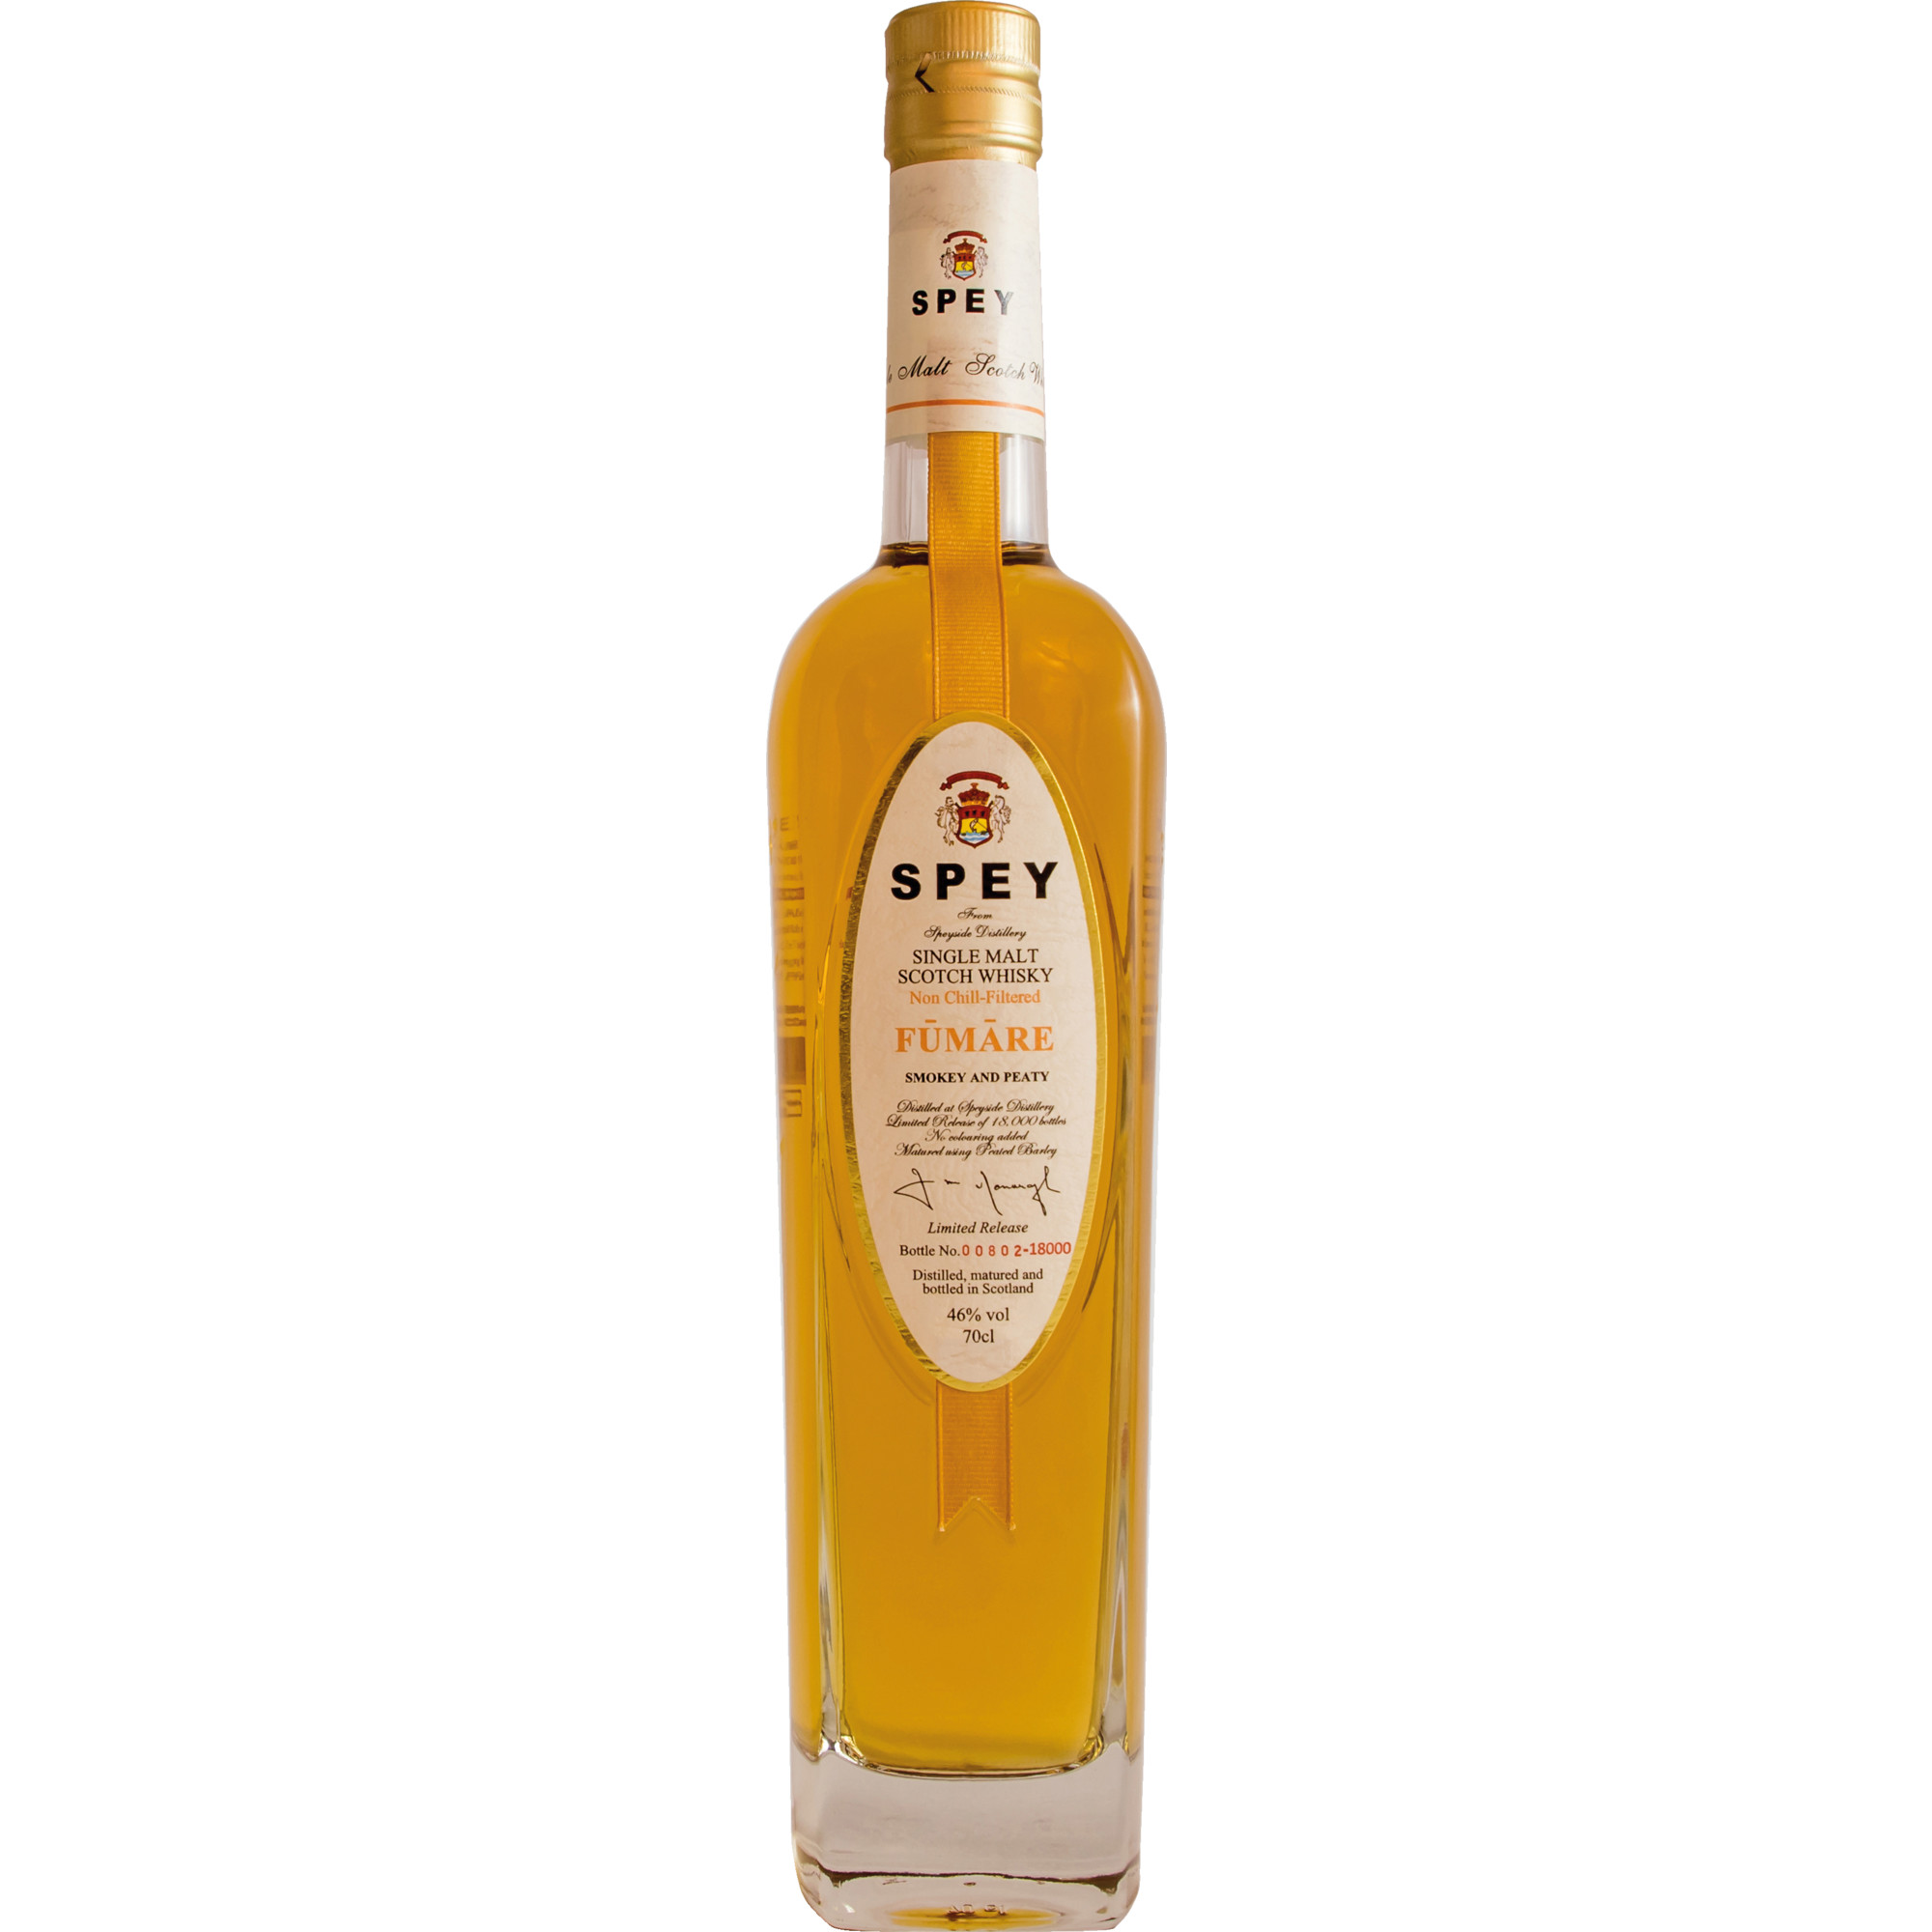 Spey Fumare Limited Release Single Malt Scotch, Whisky, Smokey and Peaty, 0,7 L, 46% Vol., Schottland, Spirituosen  Spirituosen Hawesko